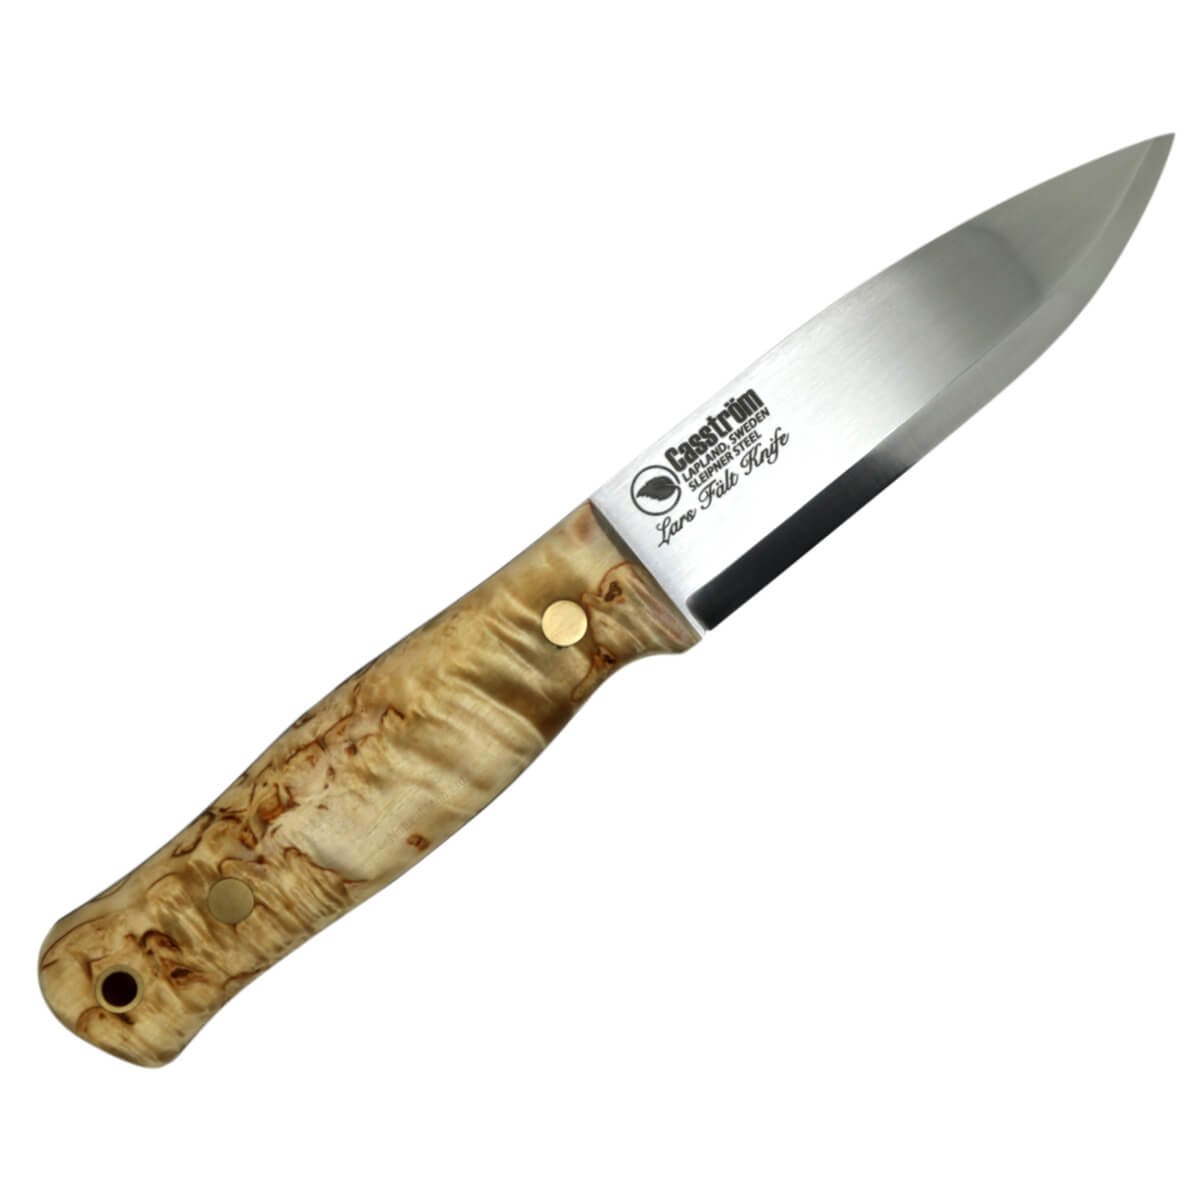 Casstrom Lars Falt Bushcraft Knife